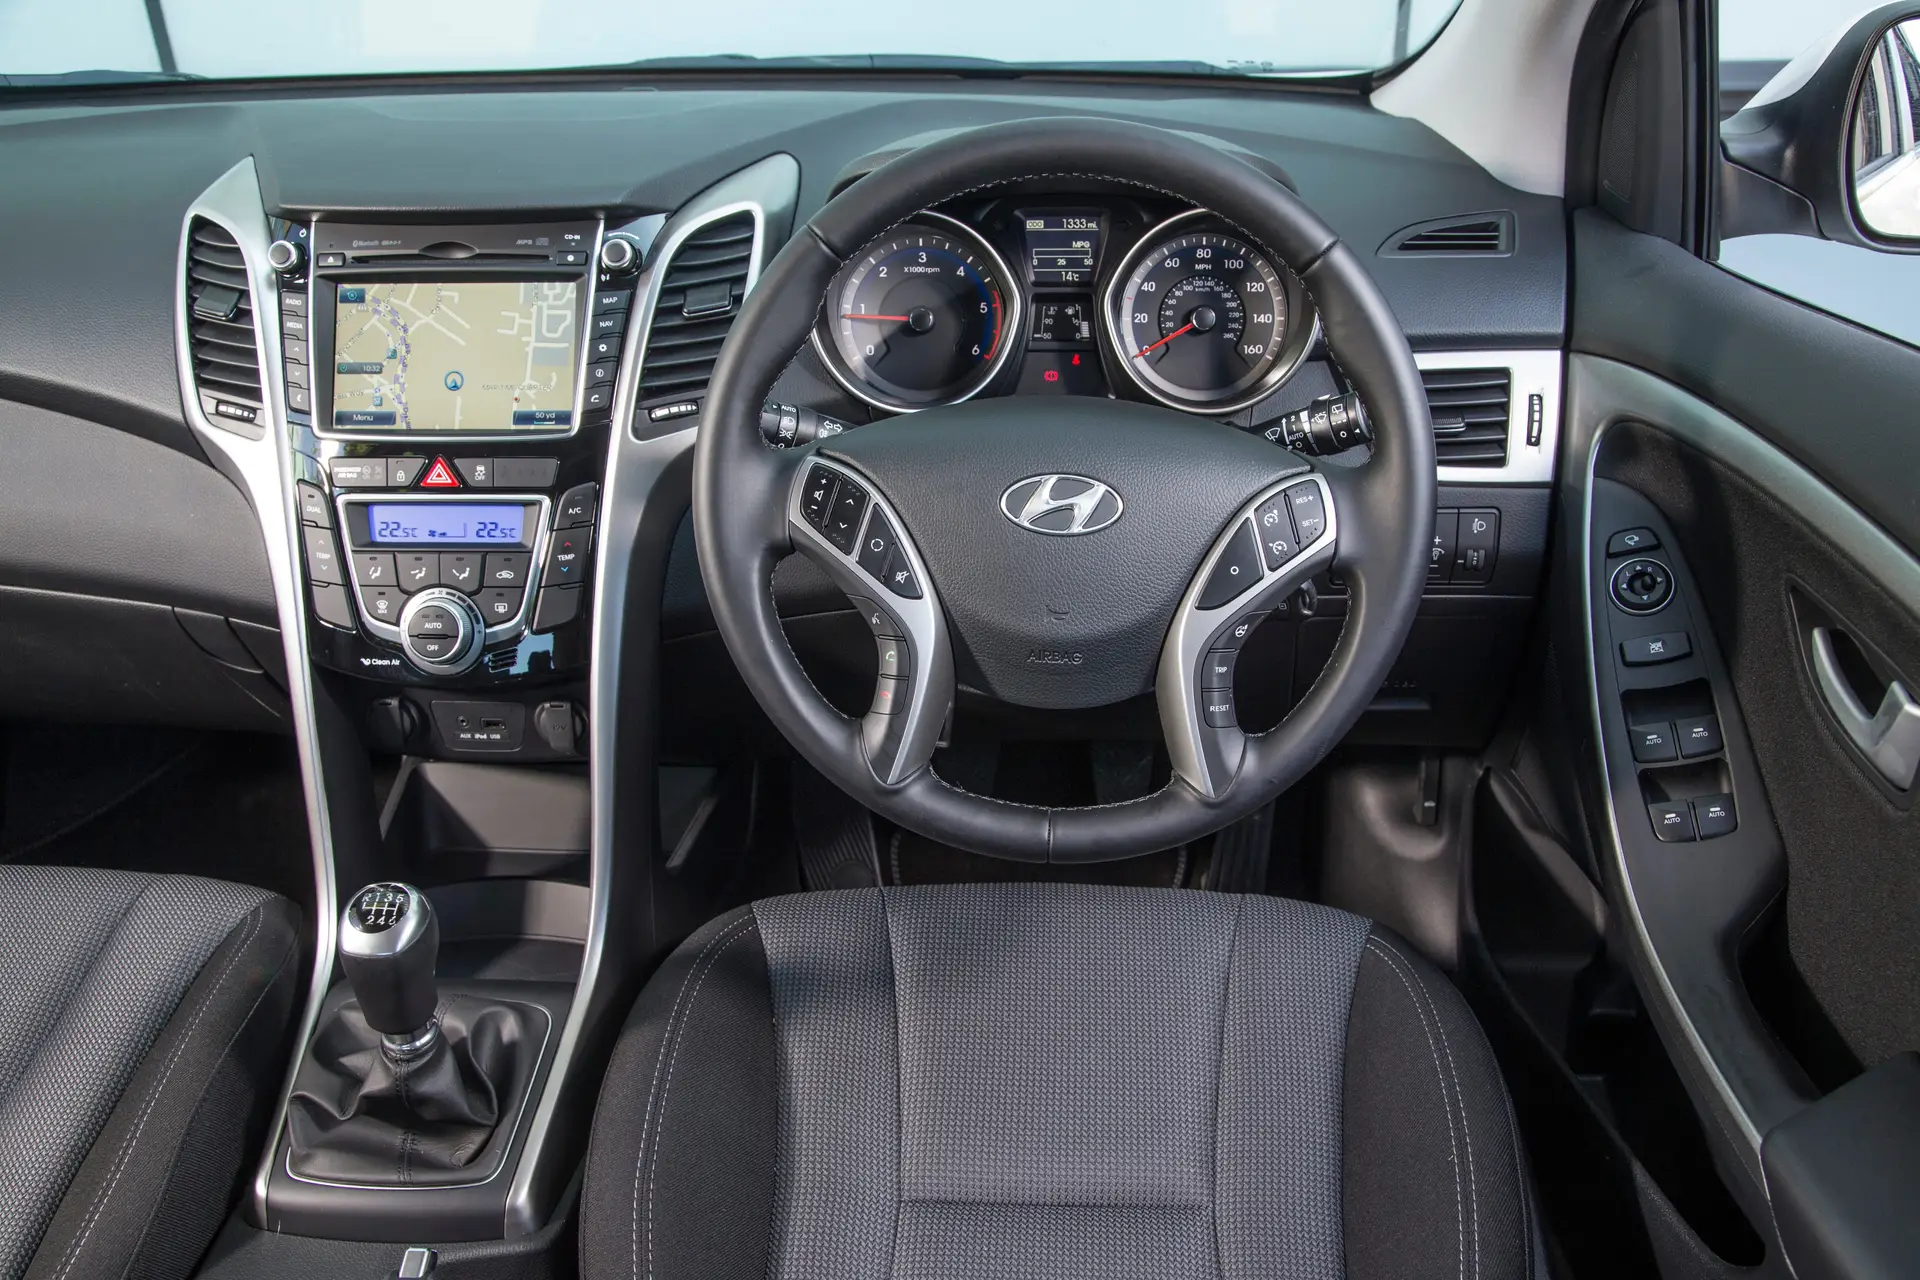 Hyundai i30 (2012) front interior